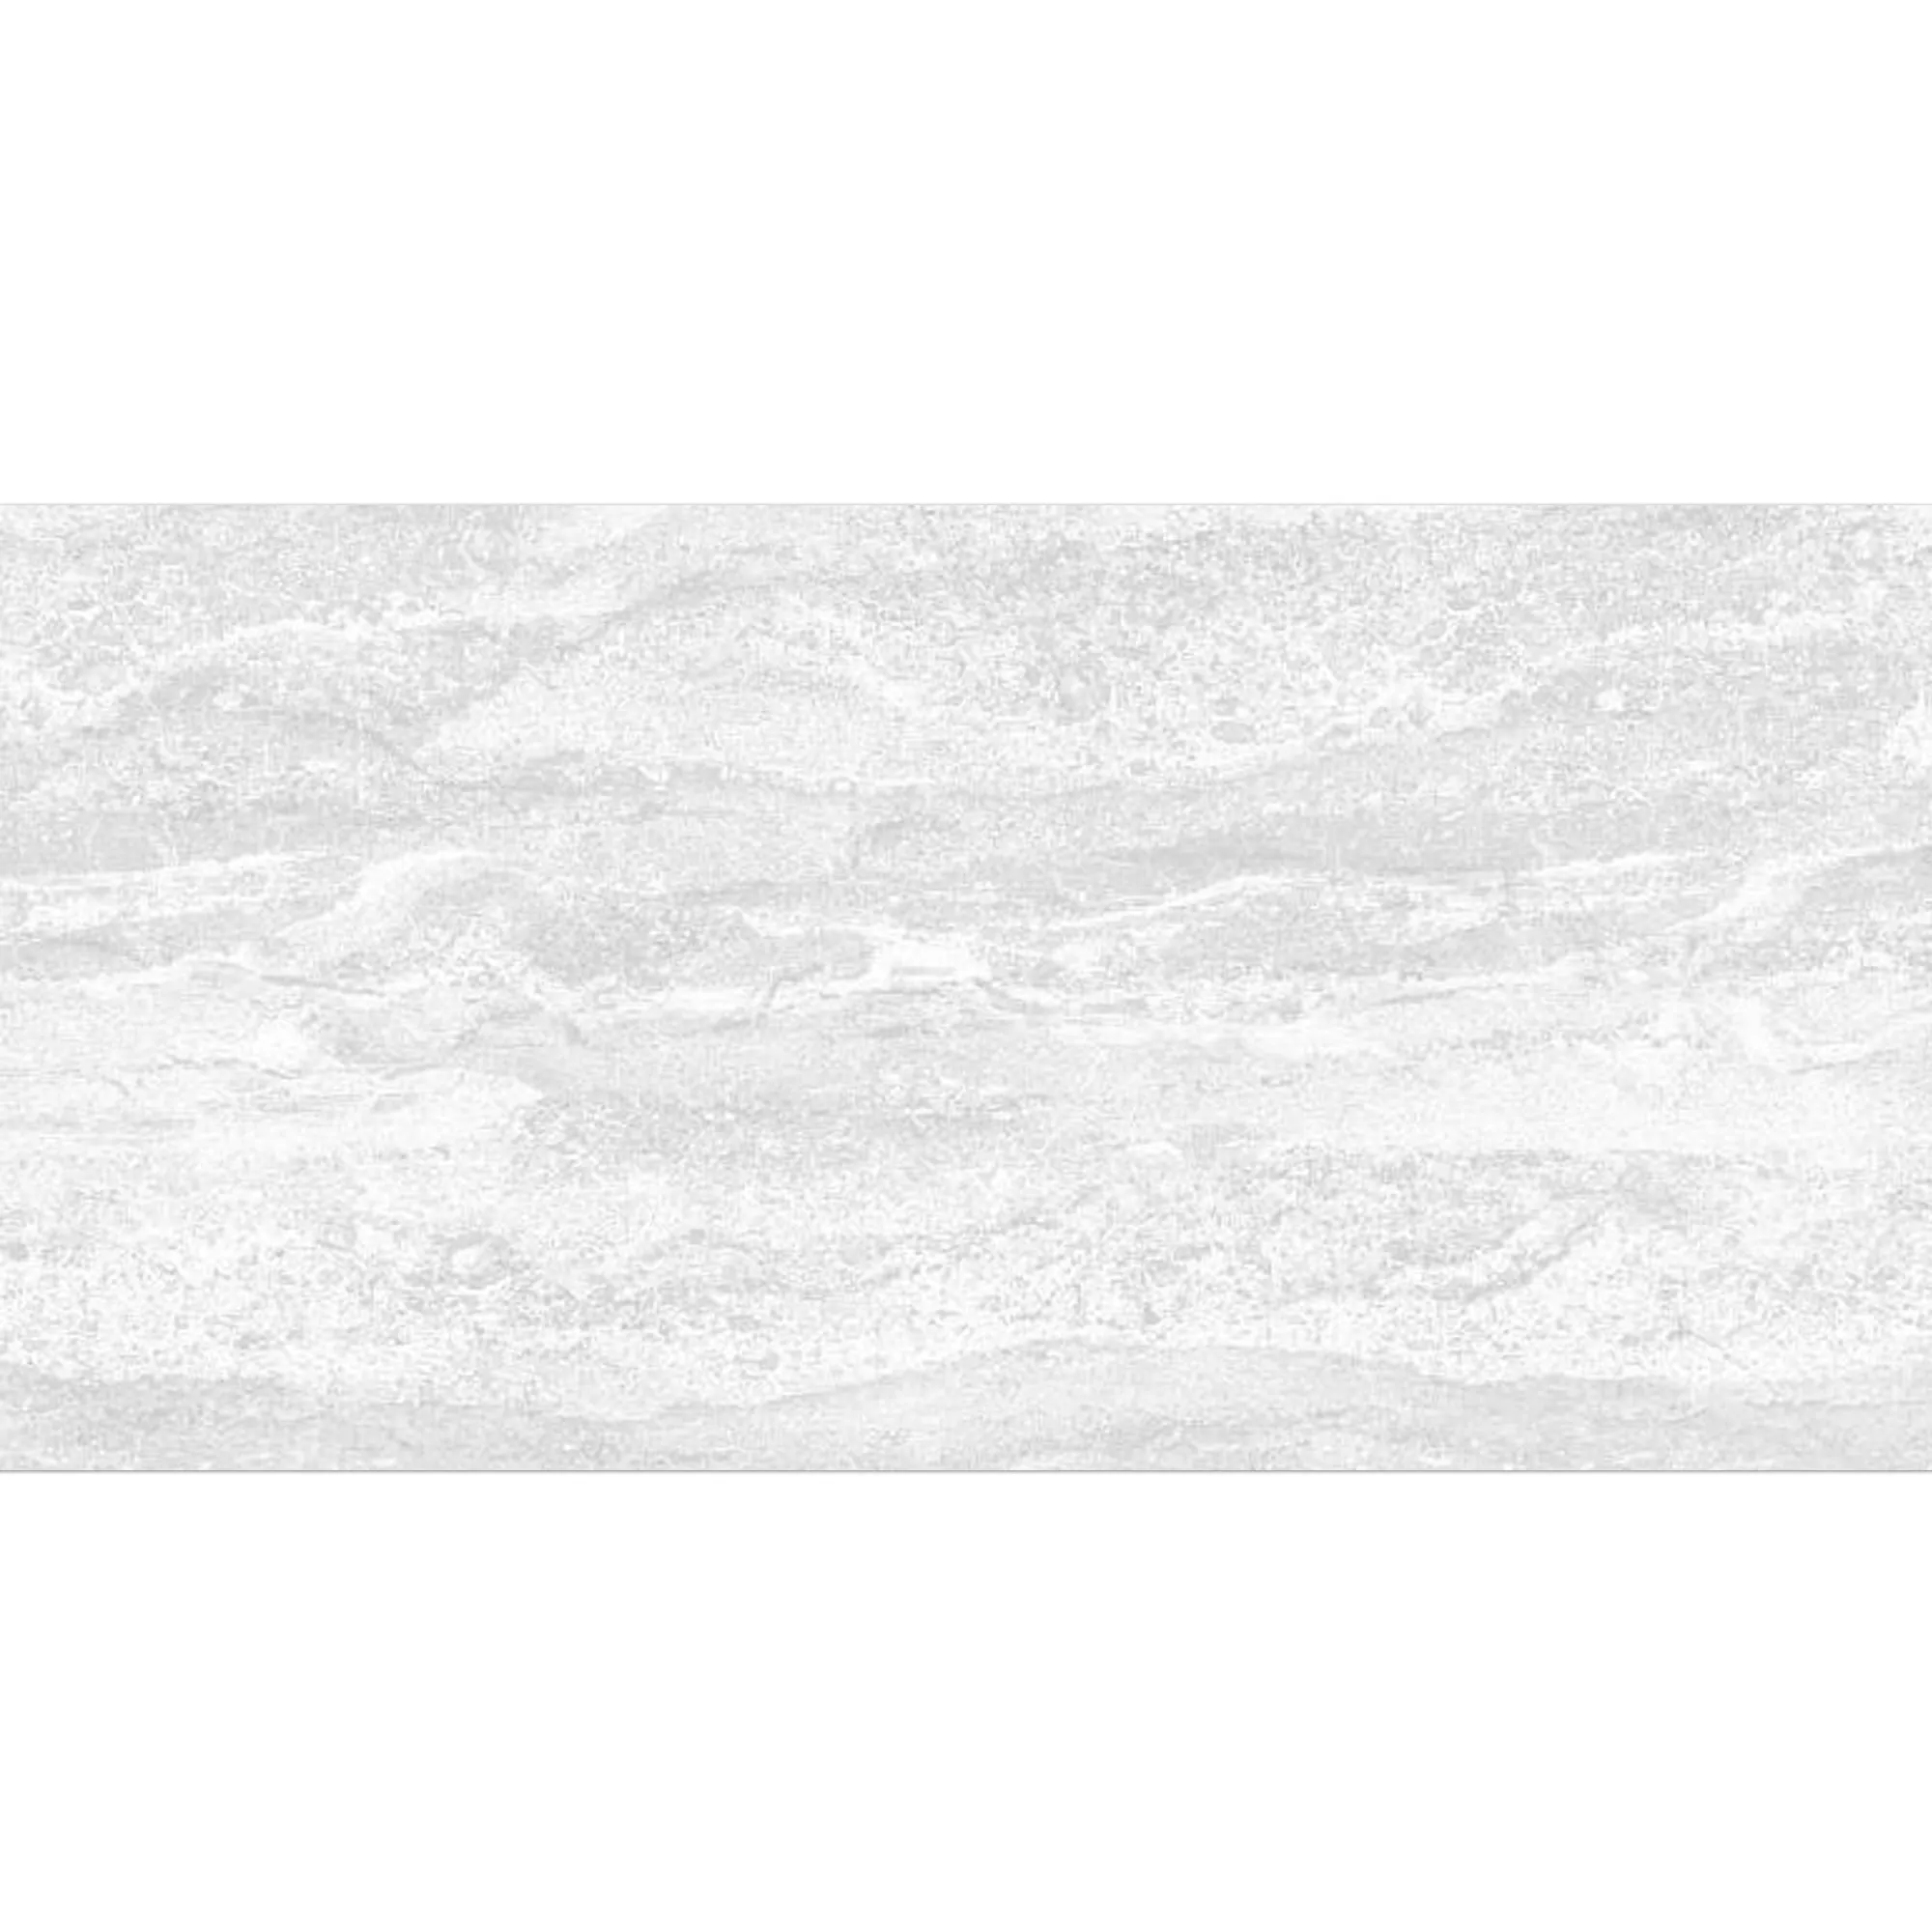 Zidne Pločica Bellinzona Bijela Strukturiran 30x60cm